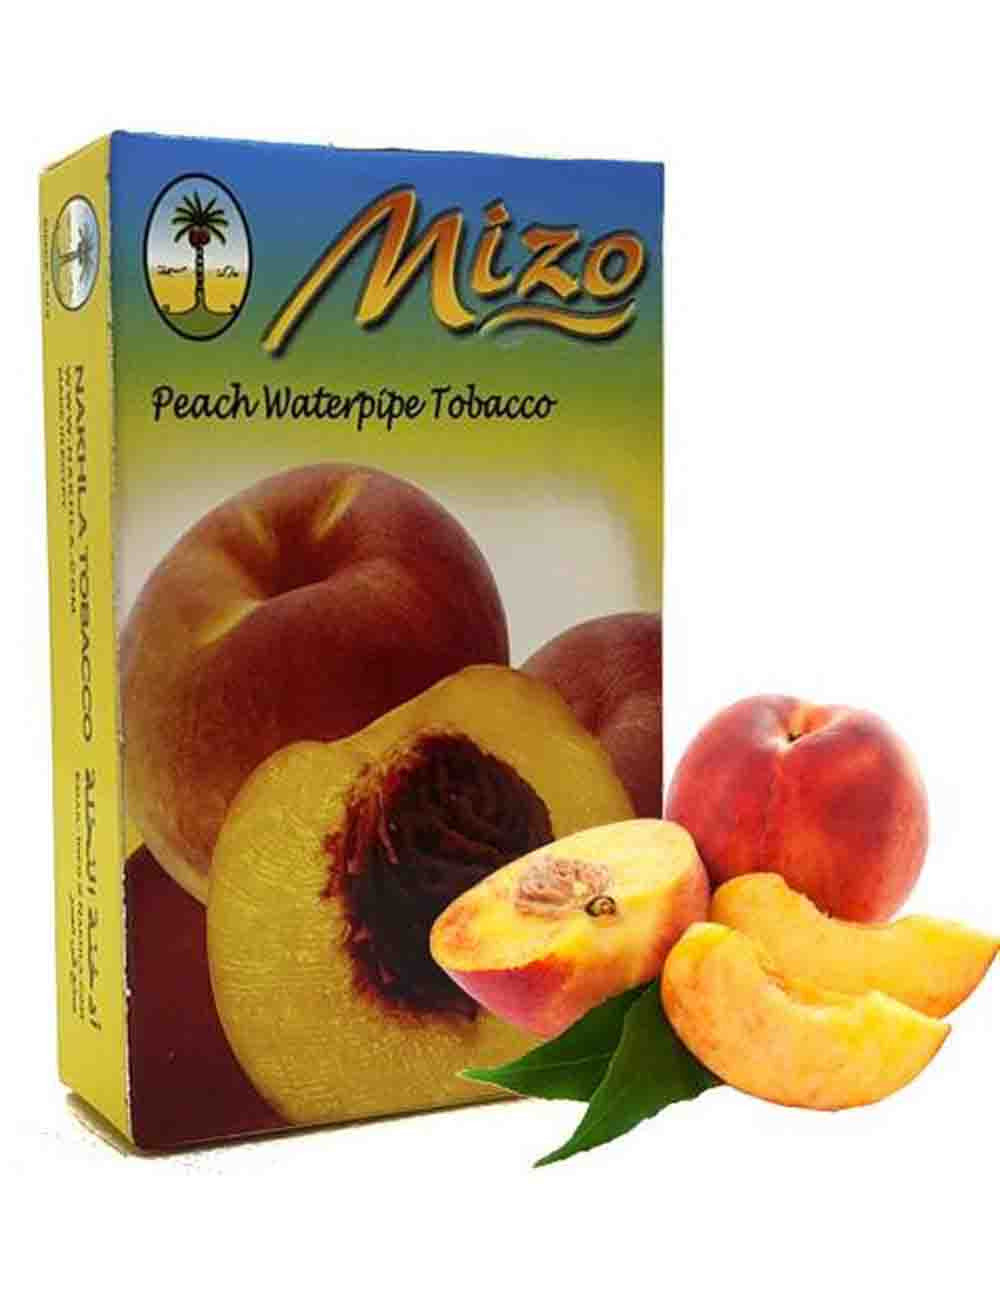 Mizo Peach